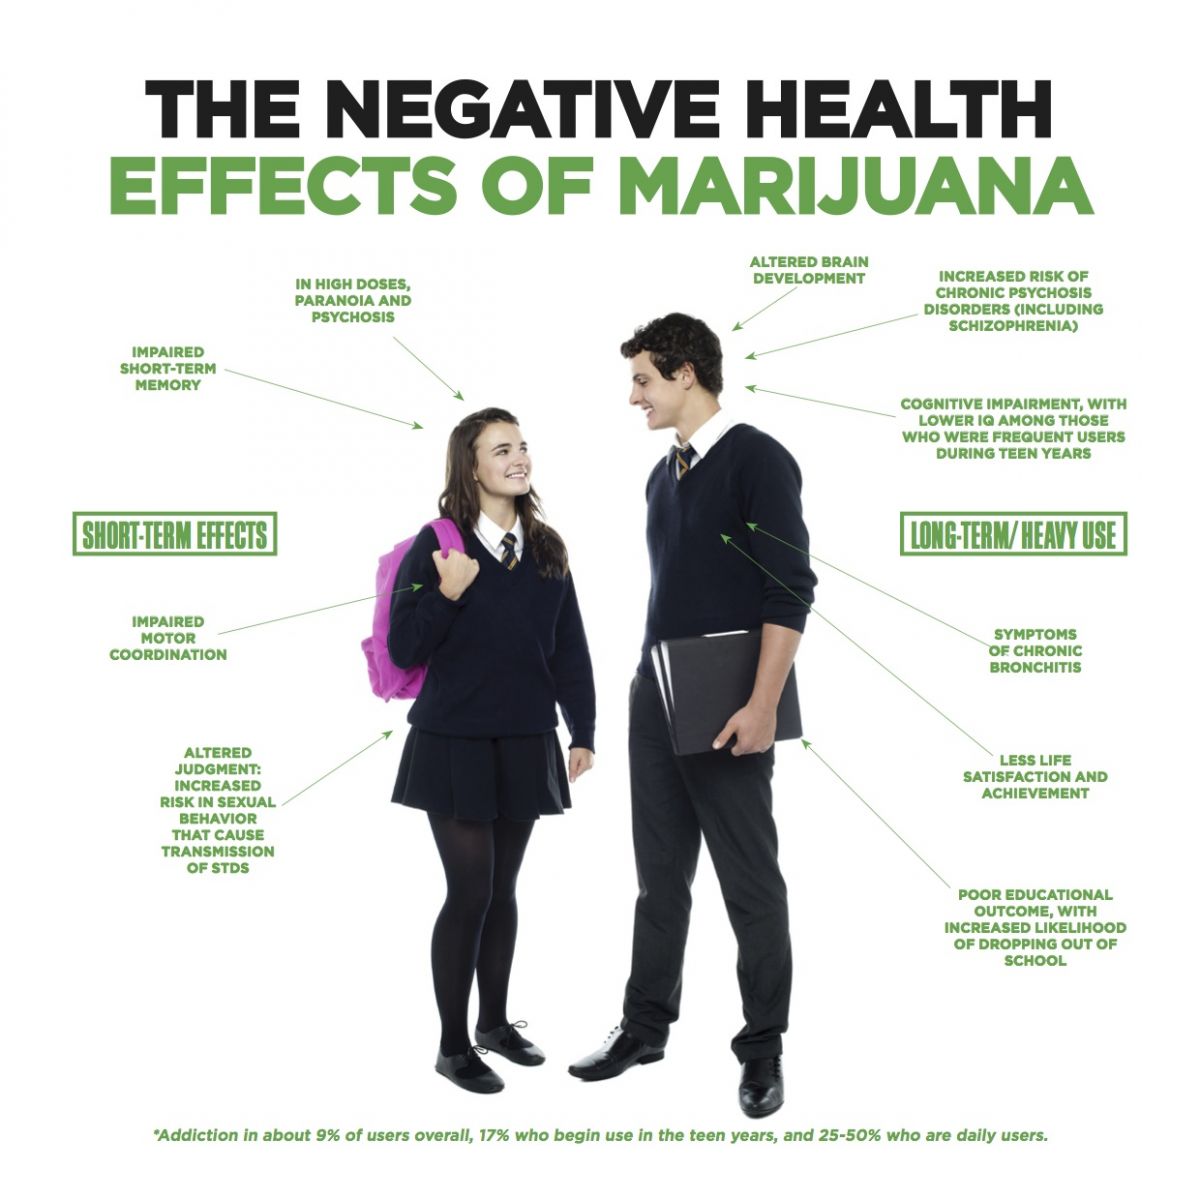 The negative health effects of marijuana